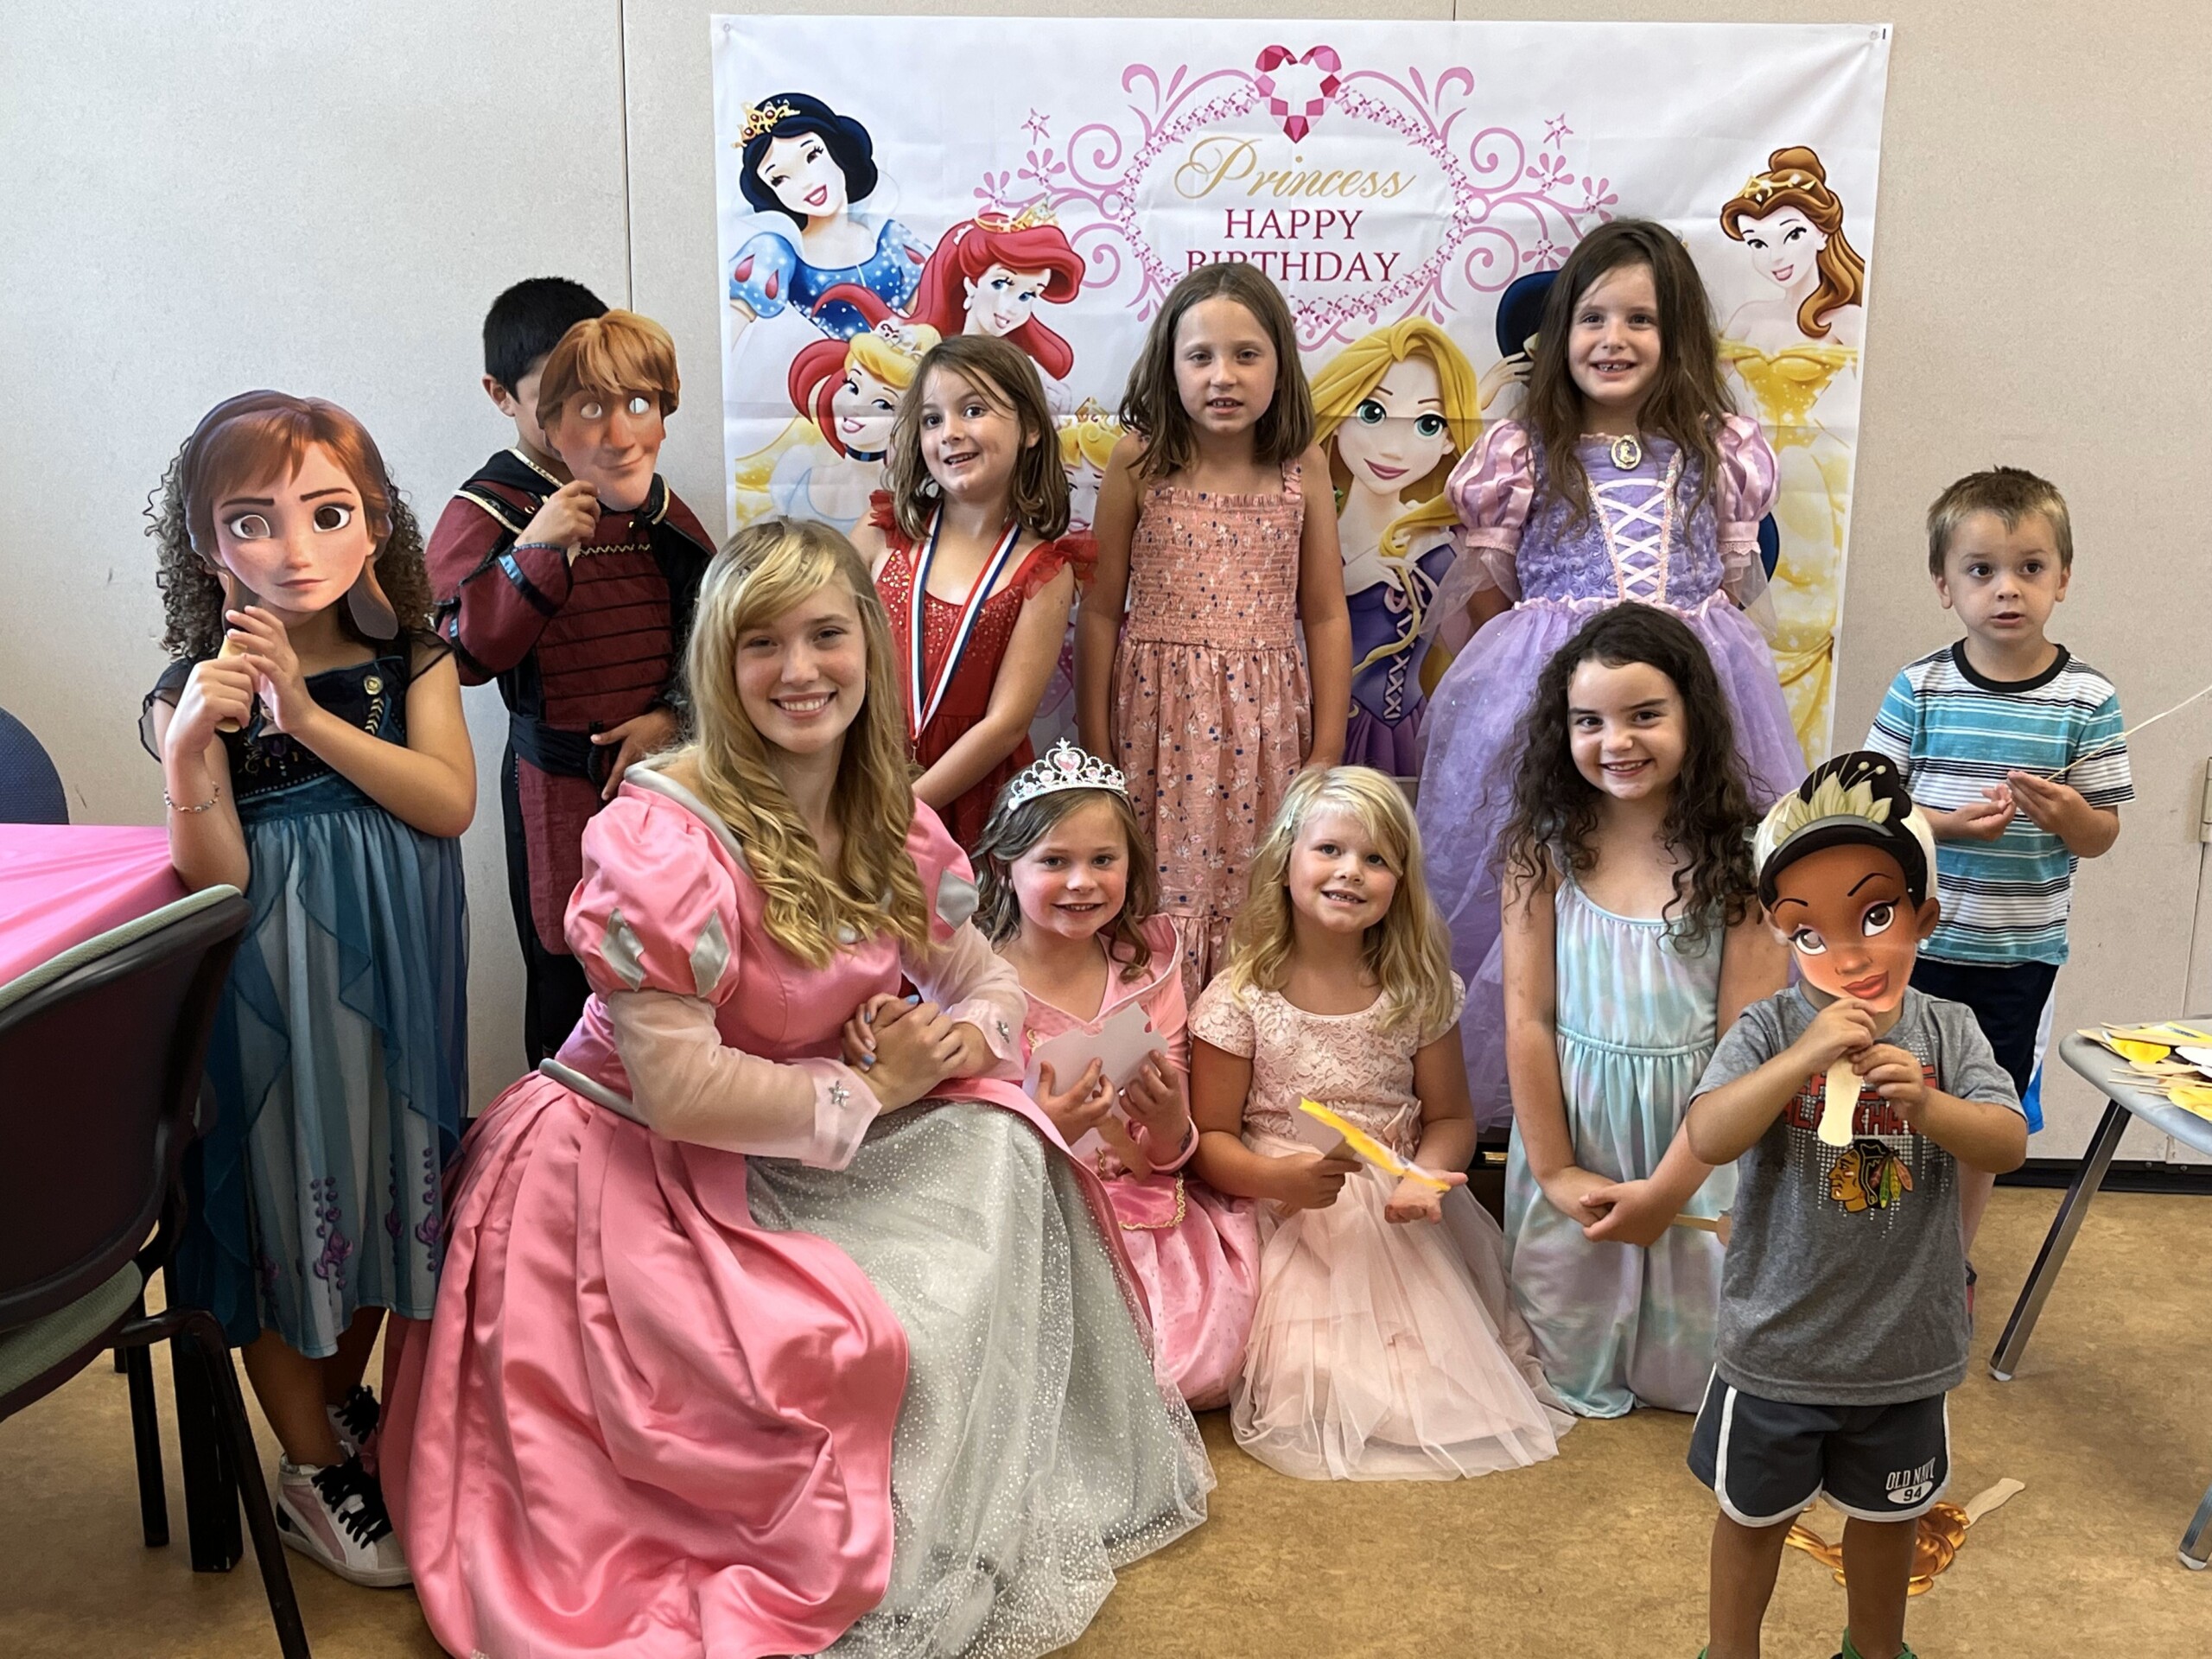 Disney Princess birthday party